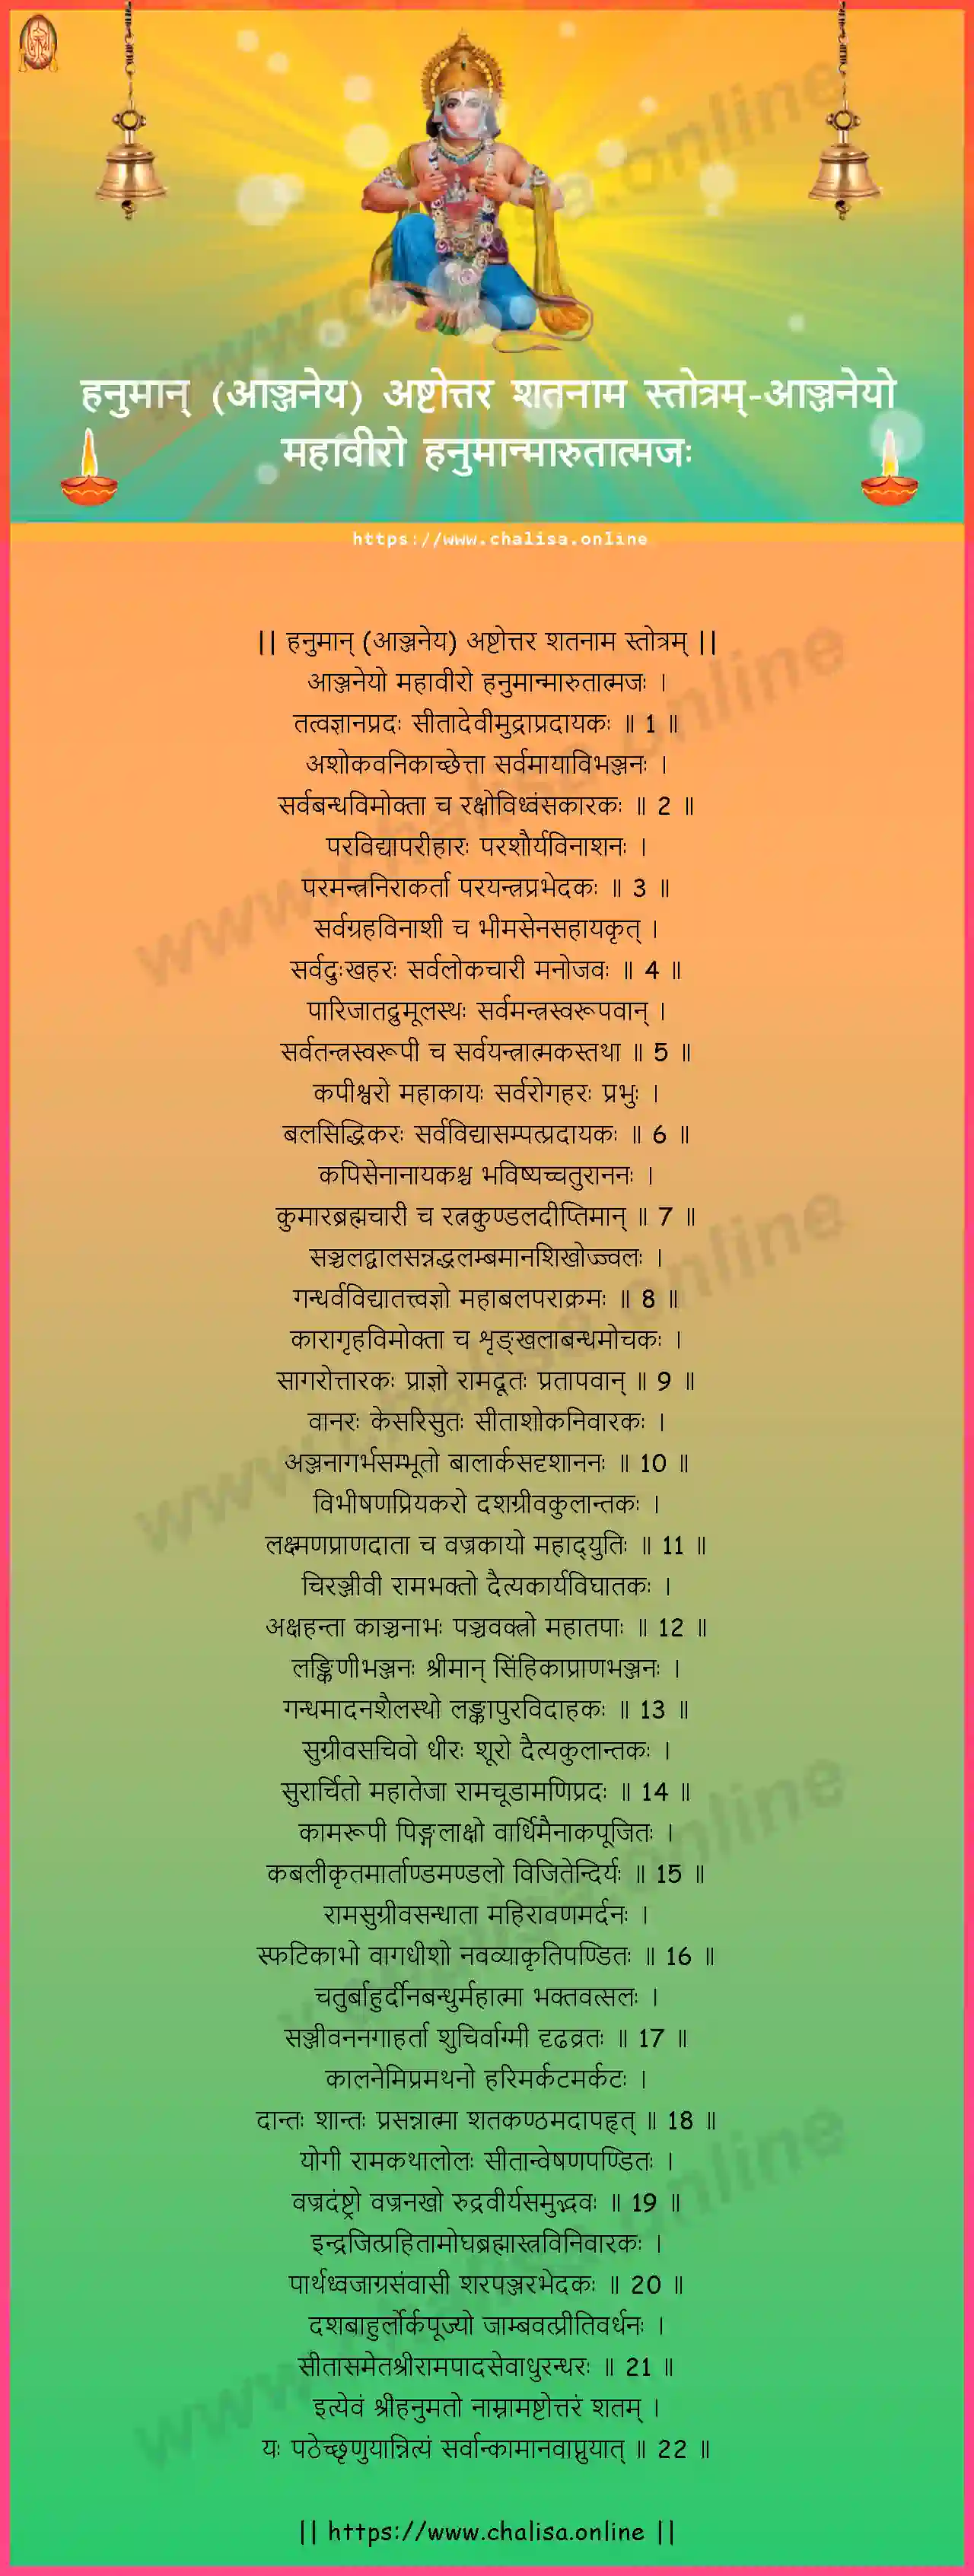 anjaneyo-mahaviro-hanuman-ashtottara-sata-naama-stotram-devanagari-devanagari-lyrics-download